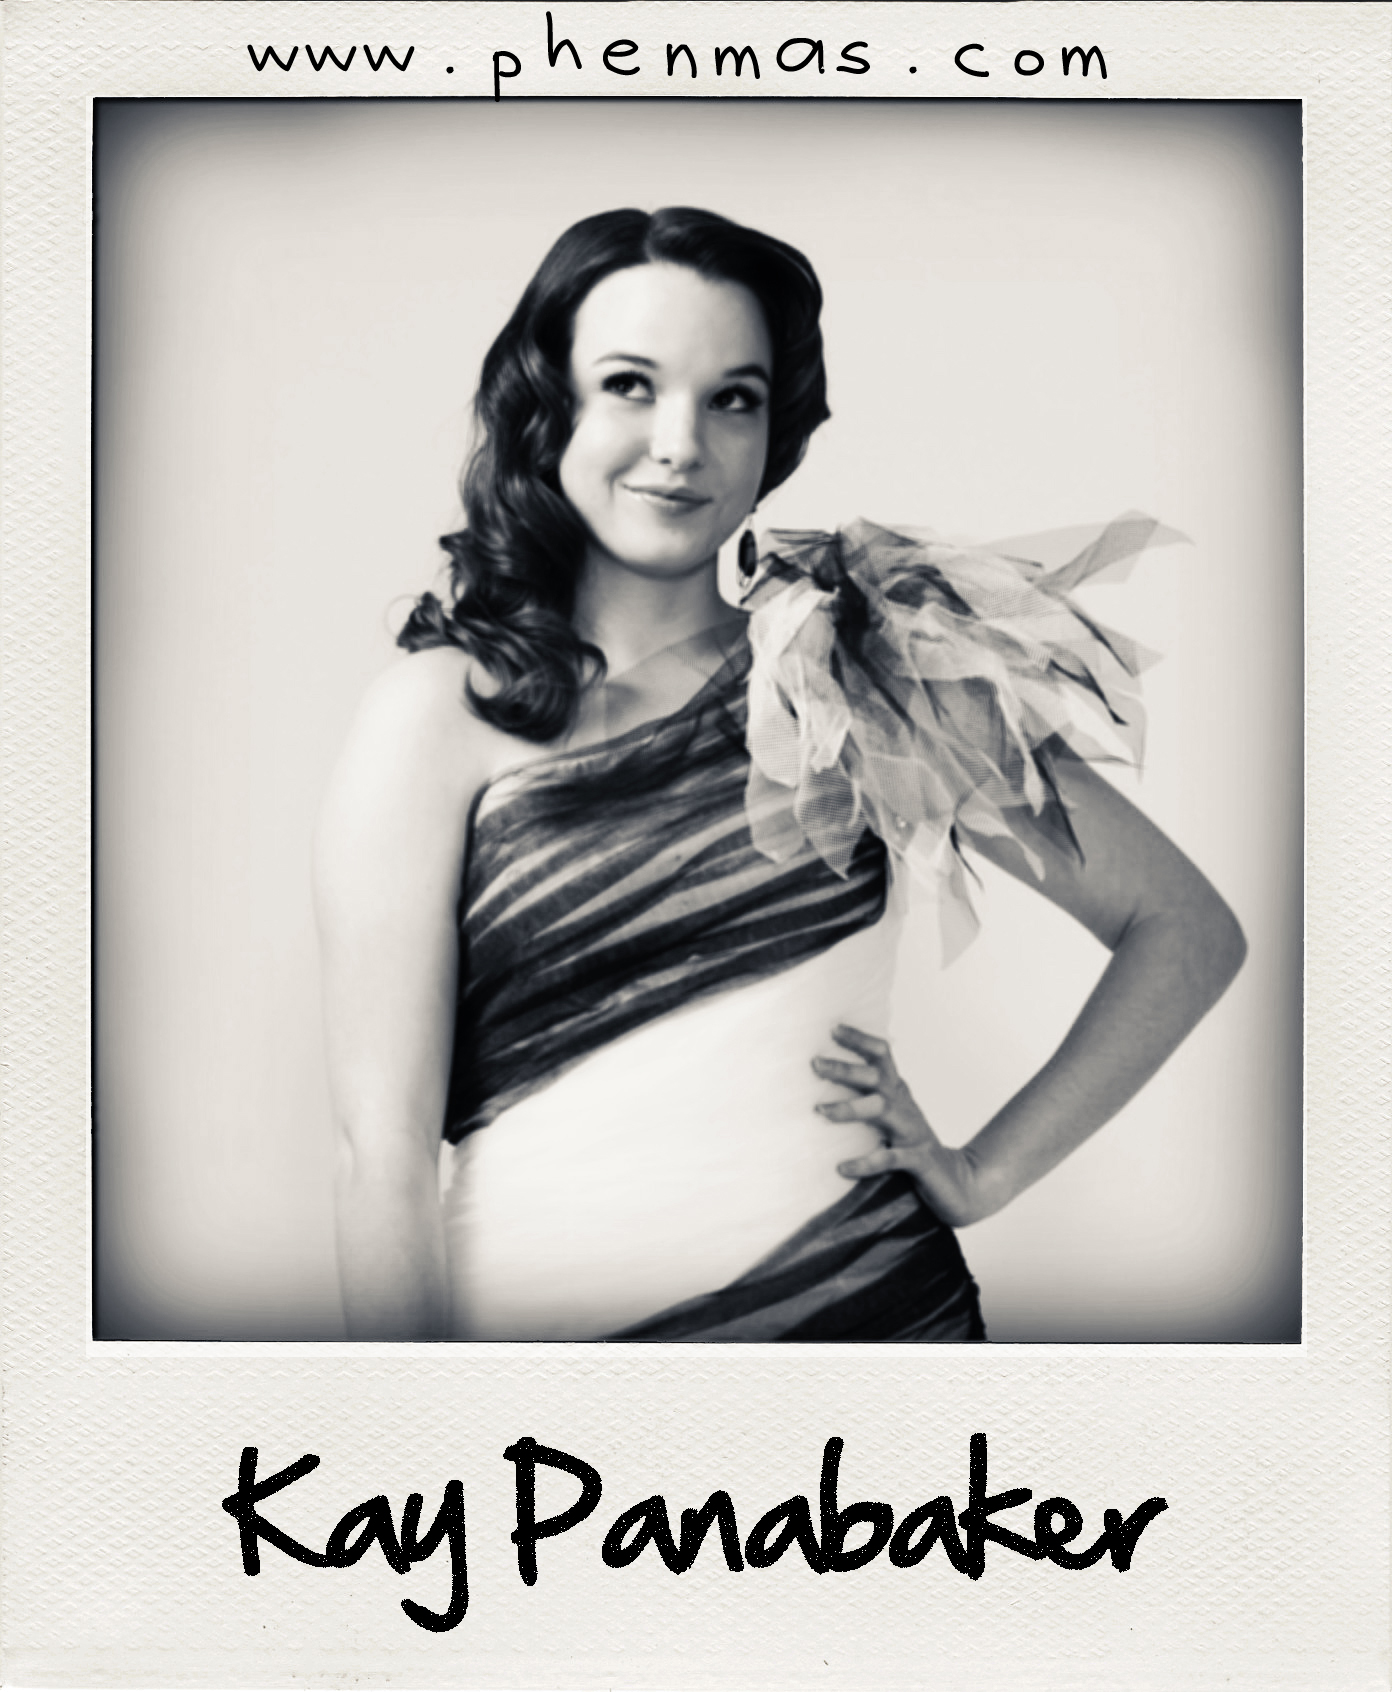 General photo of Kay Panabaker